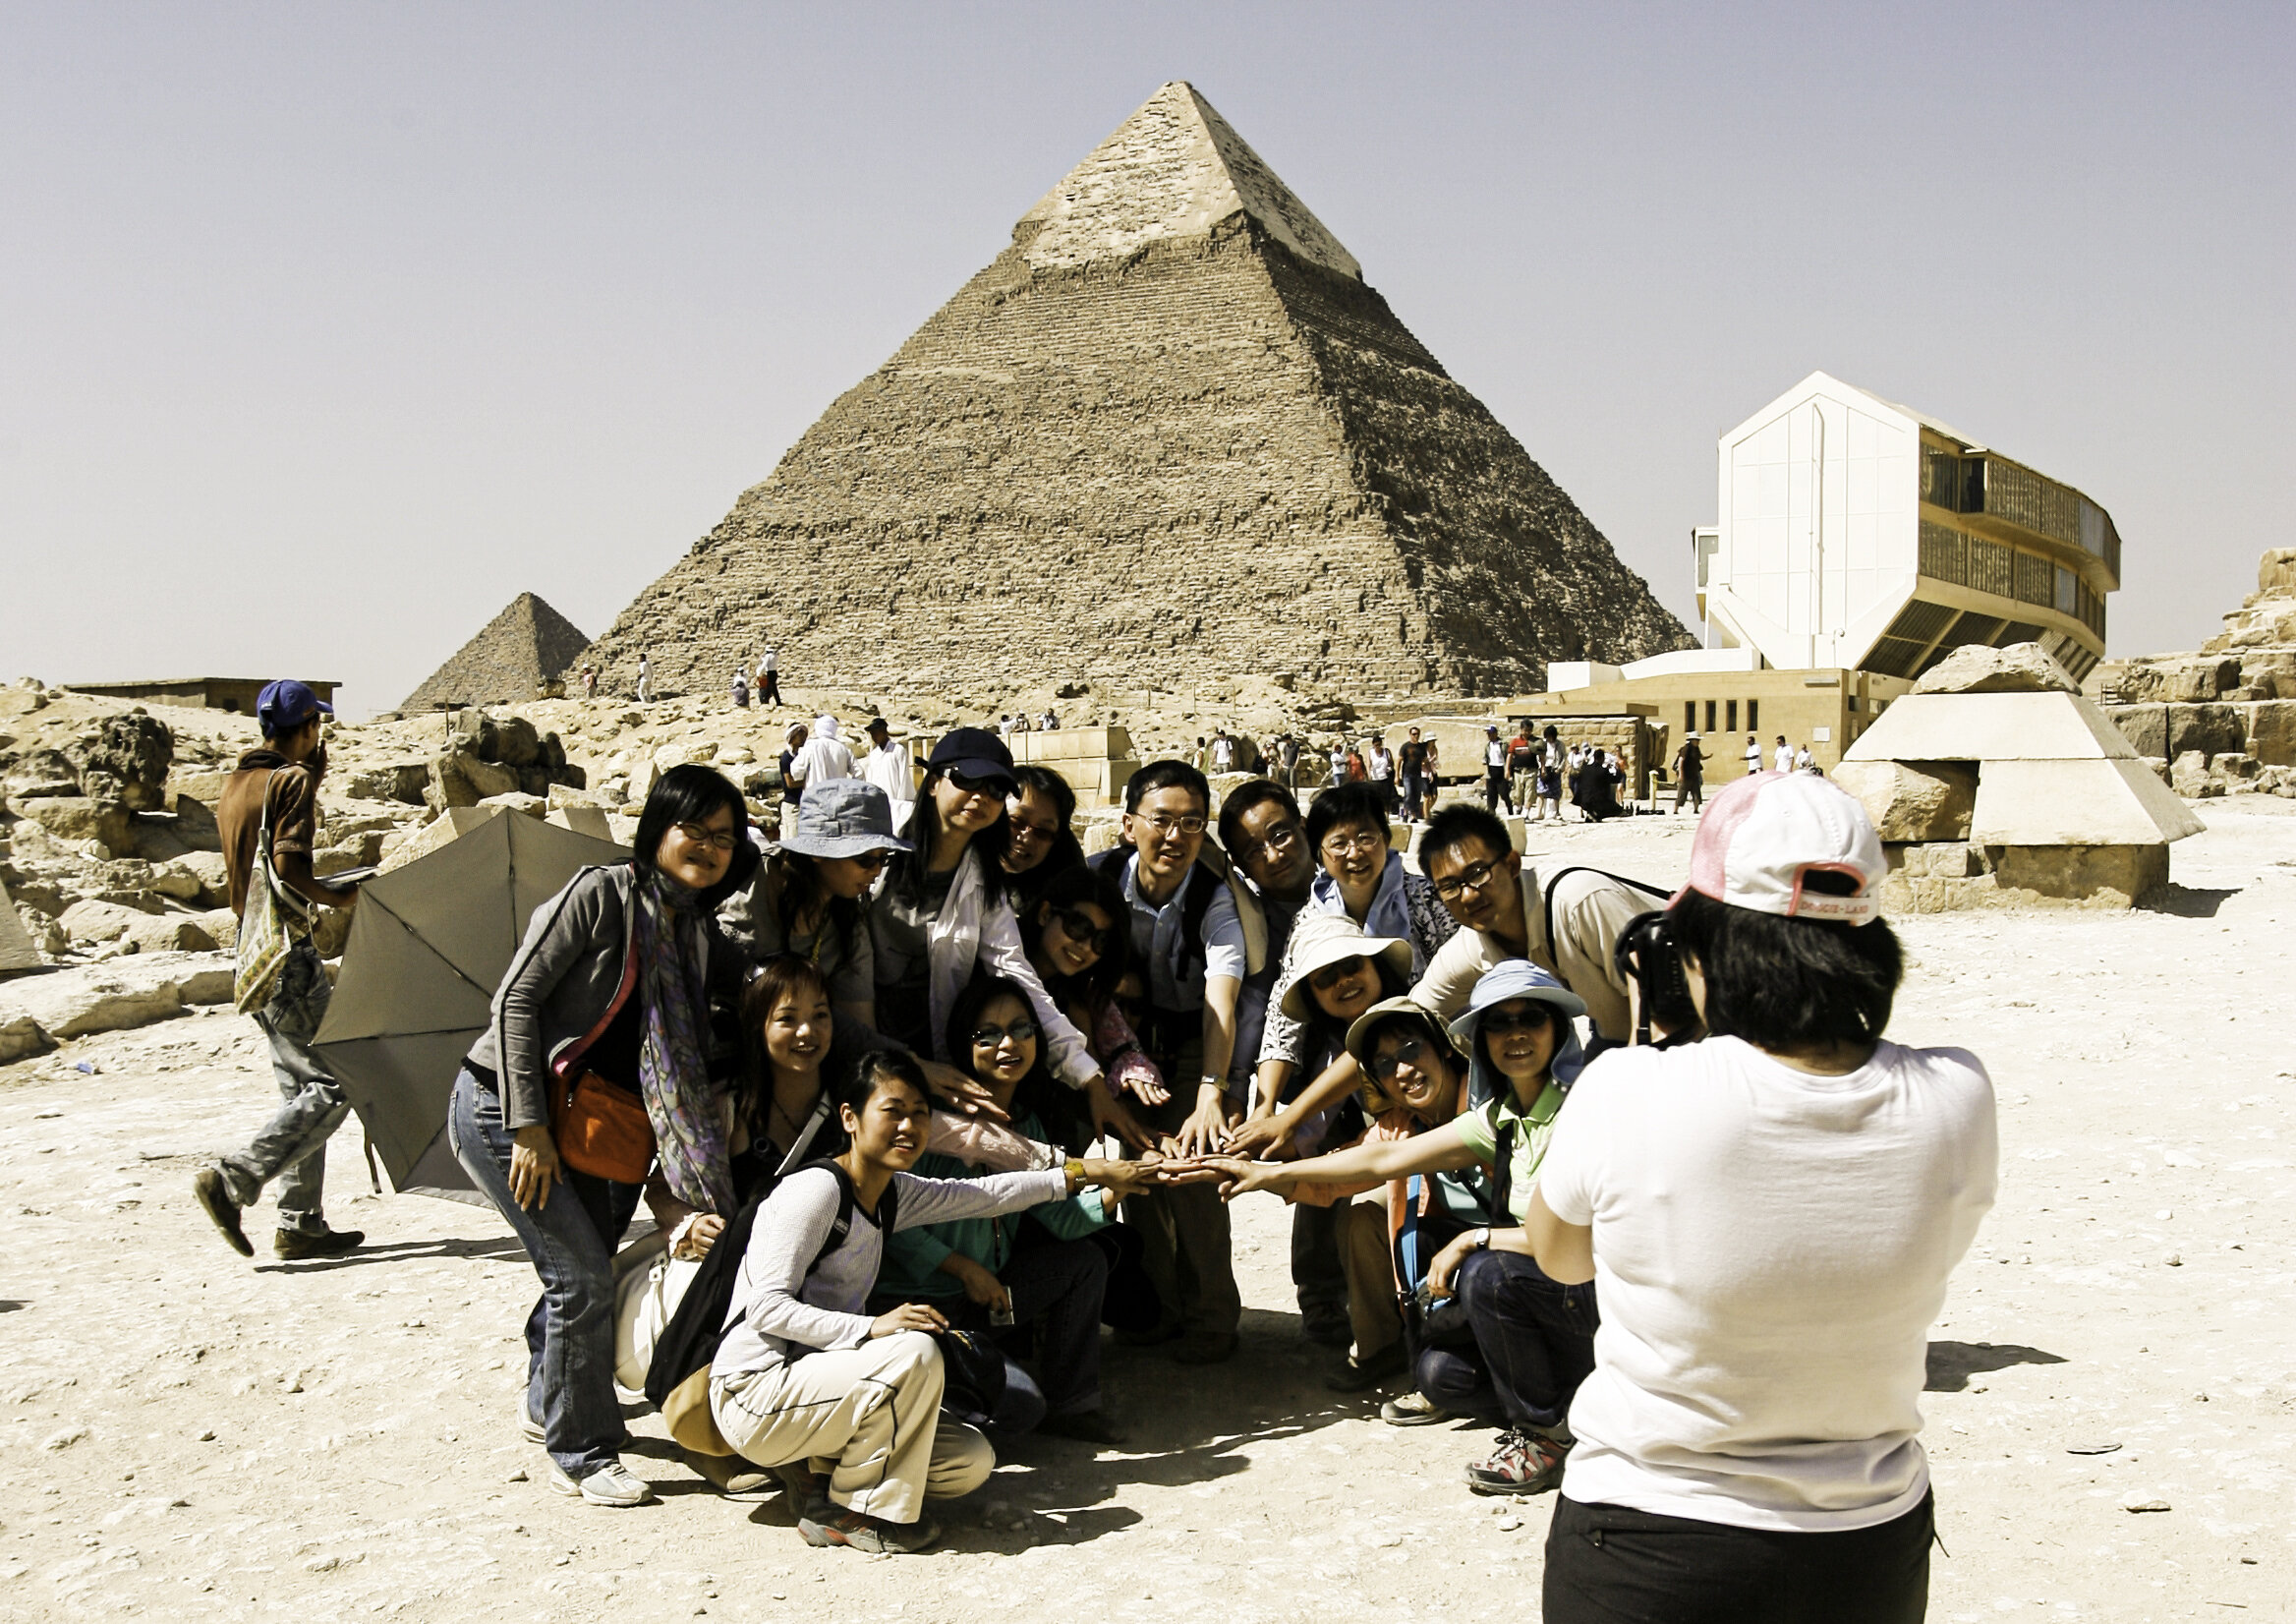 Pyramid of Giza - Egypt / 2008